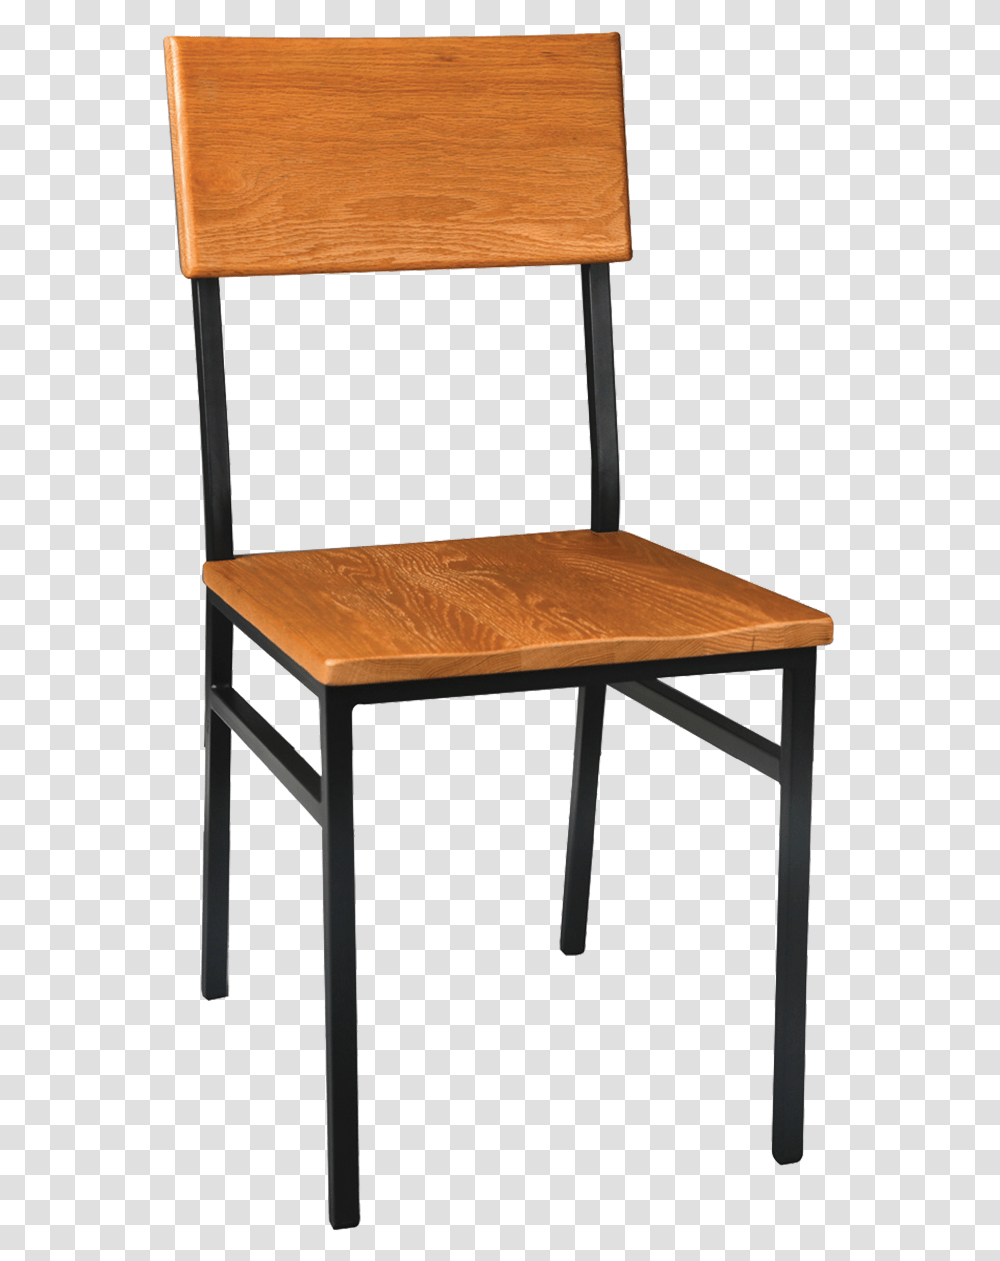 Metal Rustic Wood Chair Chair, Furniture, Hardwood, Tabletop, Plywood Transparent Png